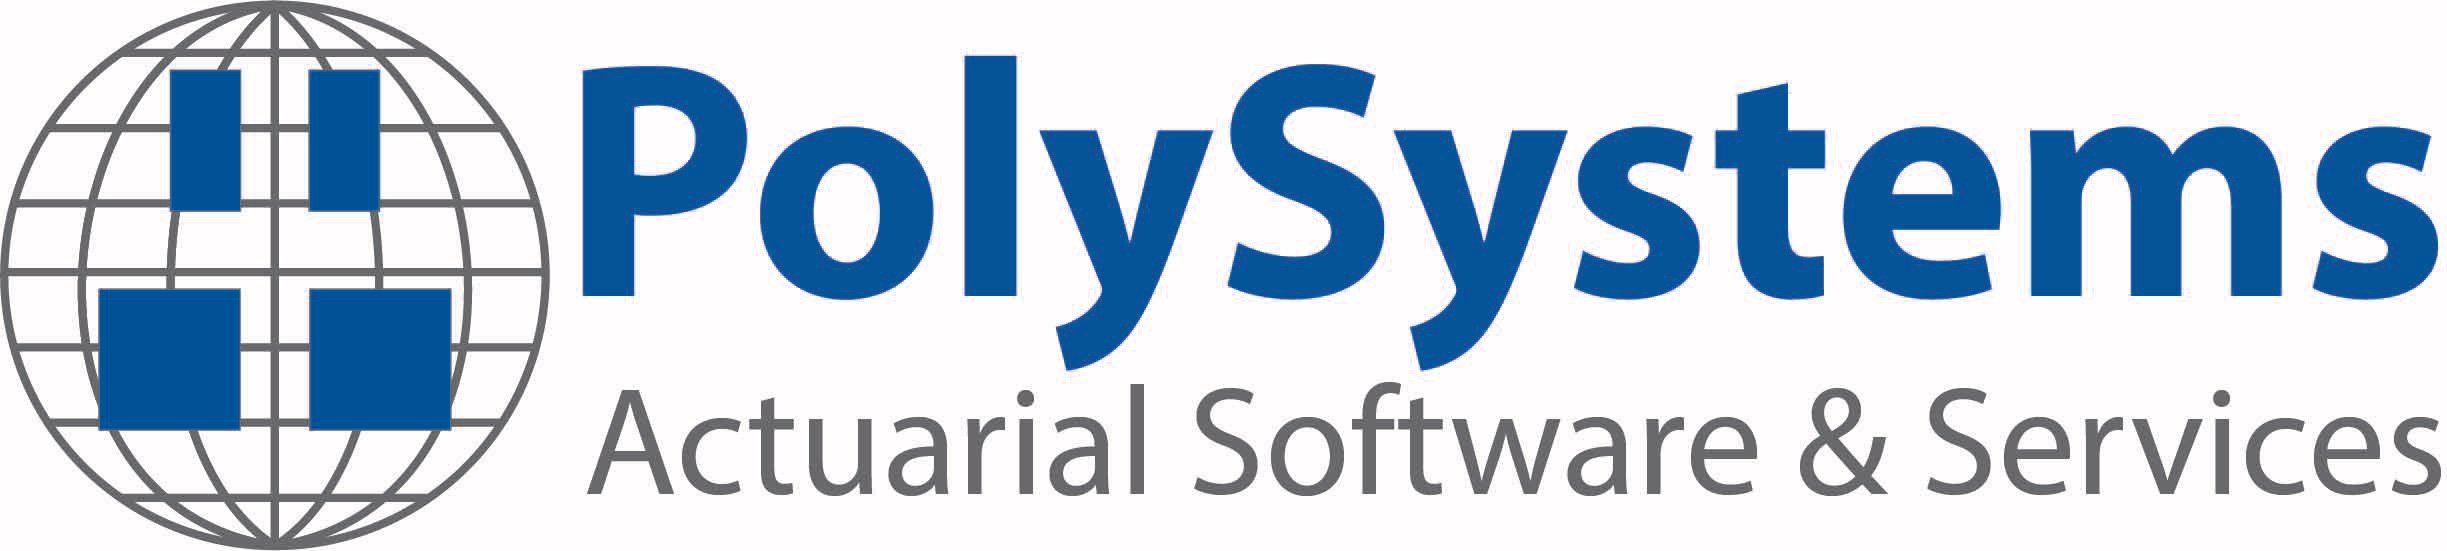 polysystems-logo.jpg